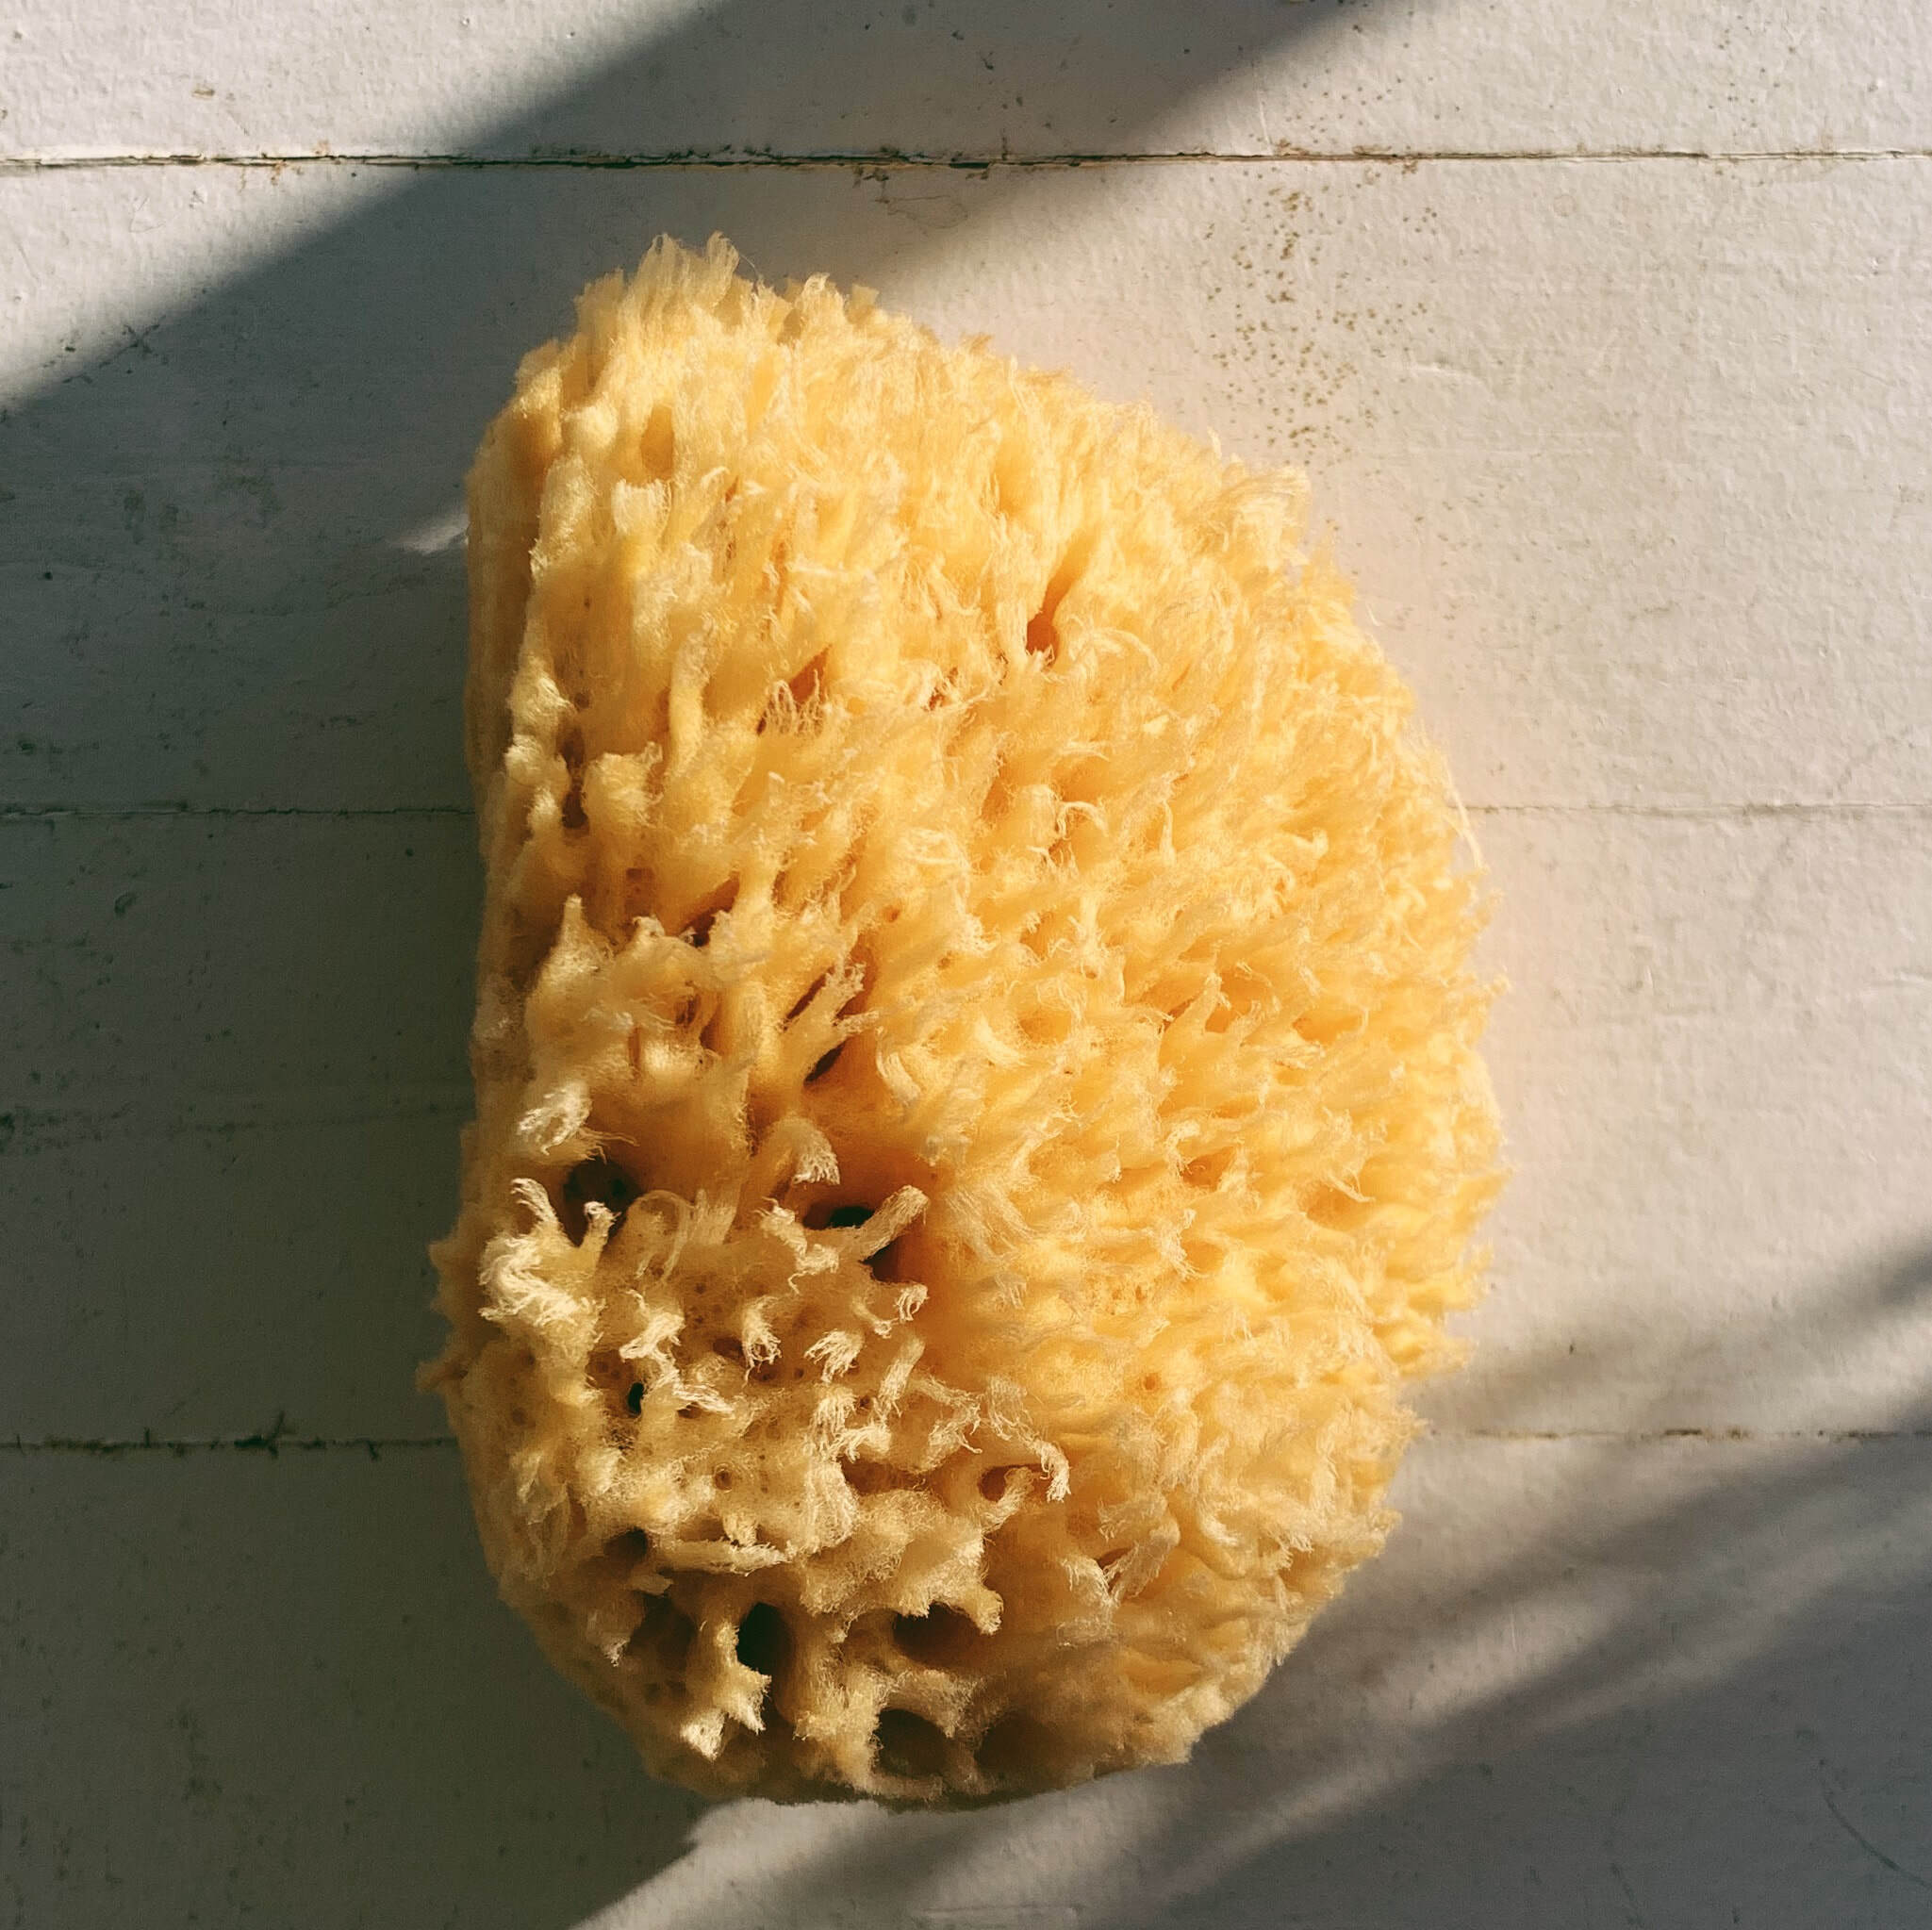 Sponge 1139 | Natural Sea Sponge Large